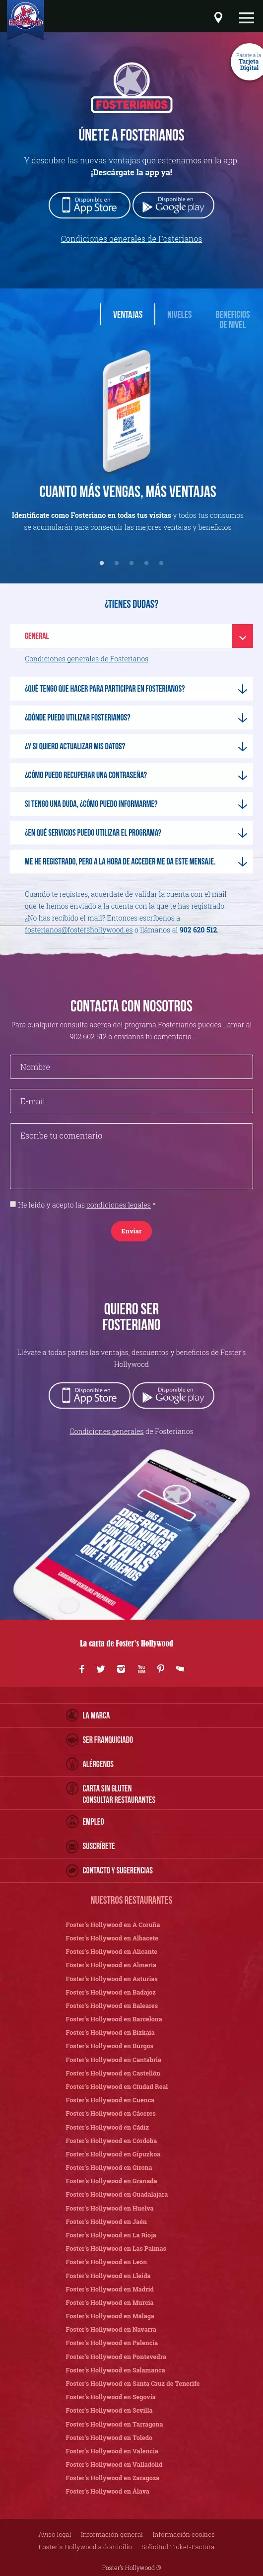 fosterhollywood-FAQ-mobile